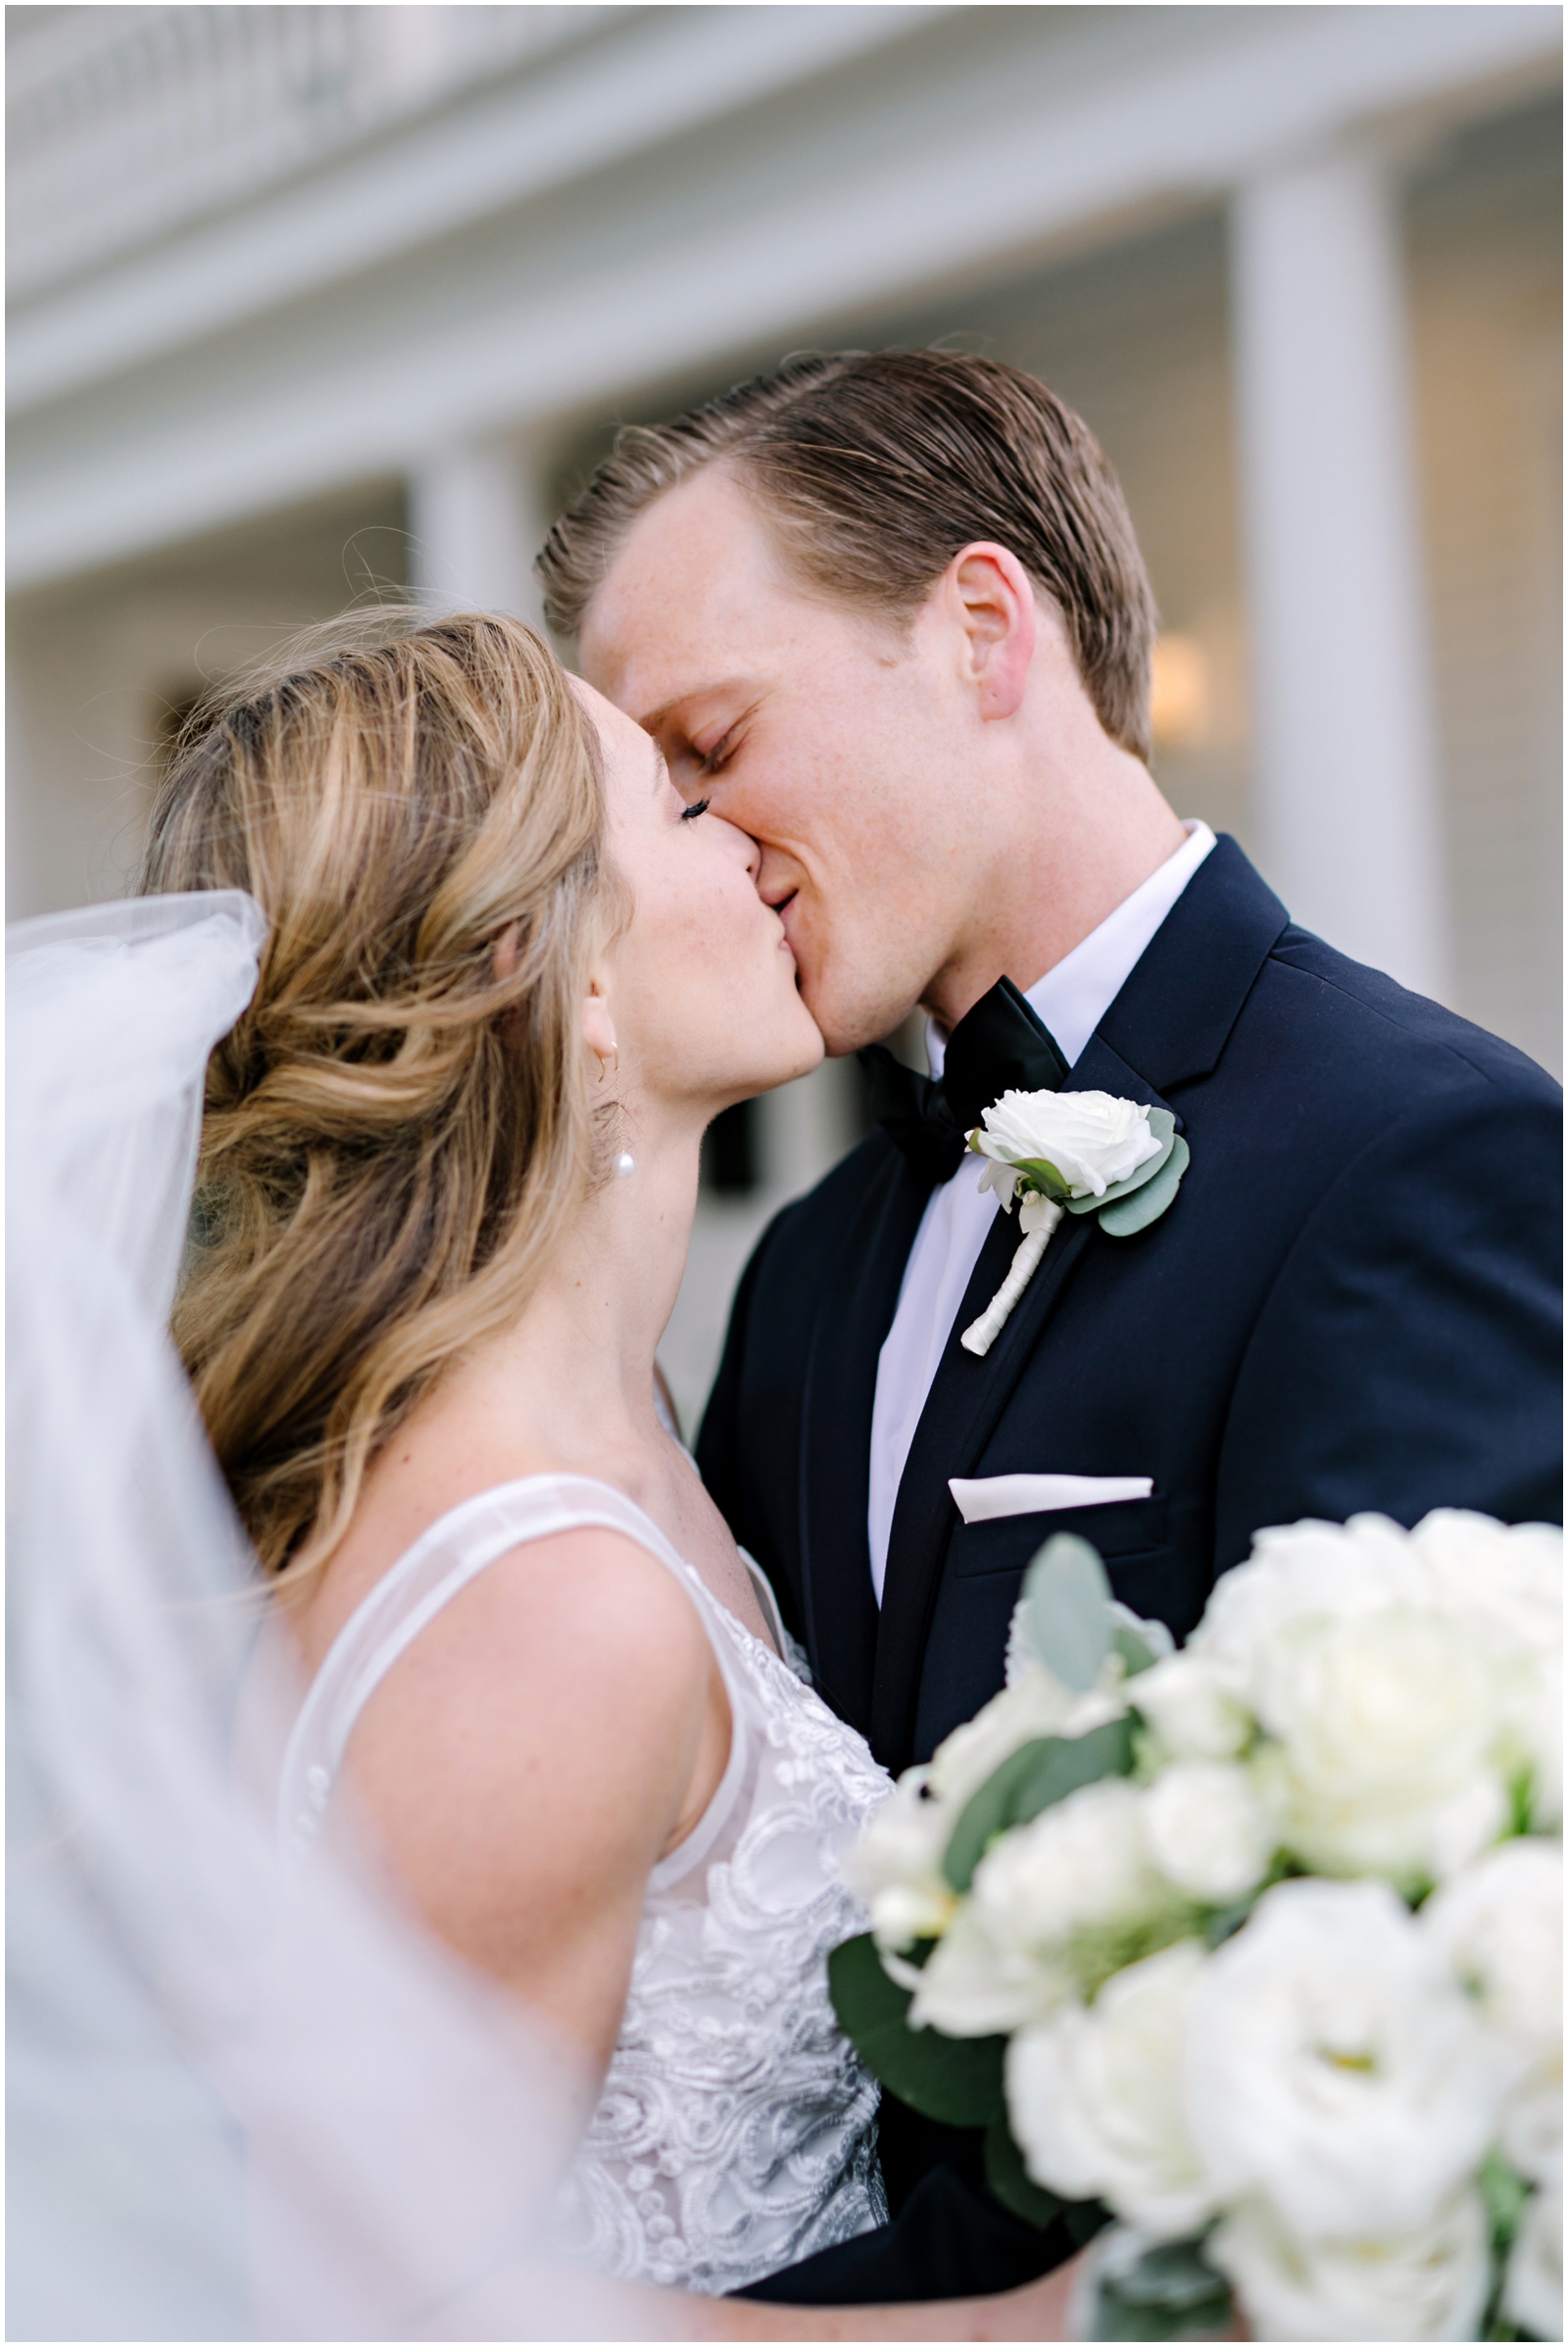  Bride and groom kiss  